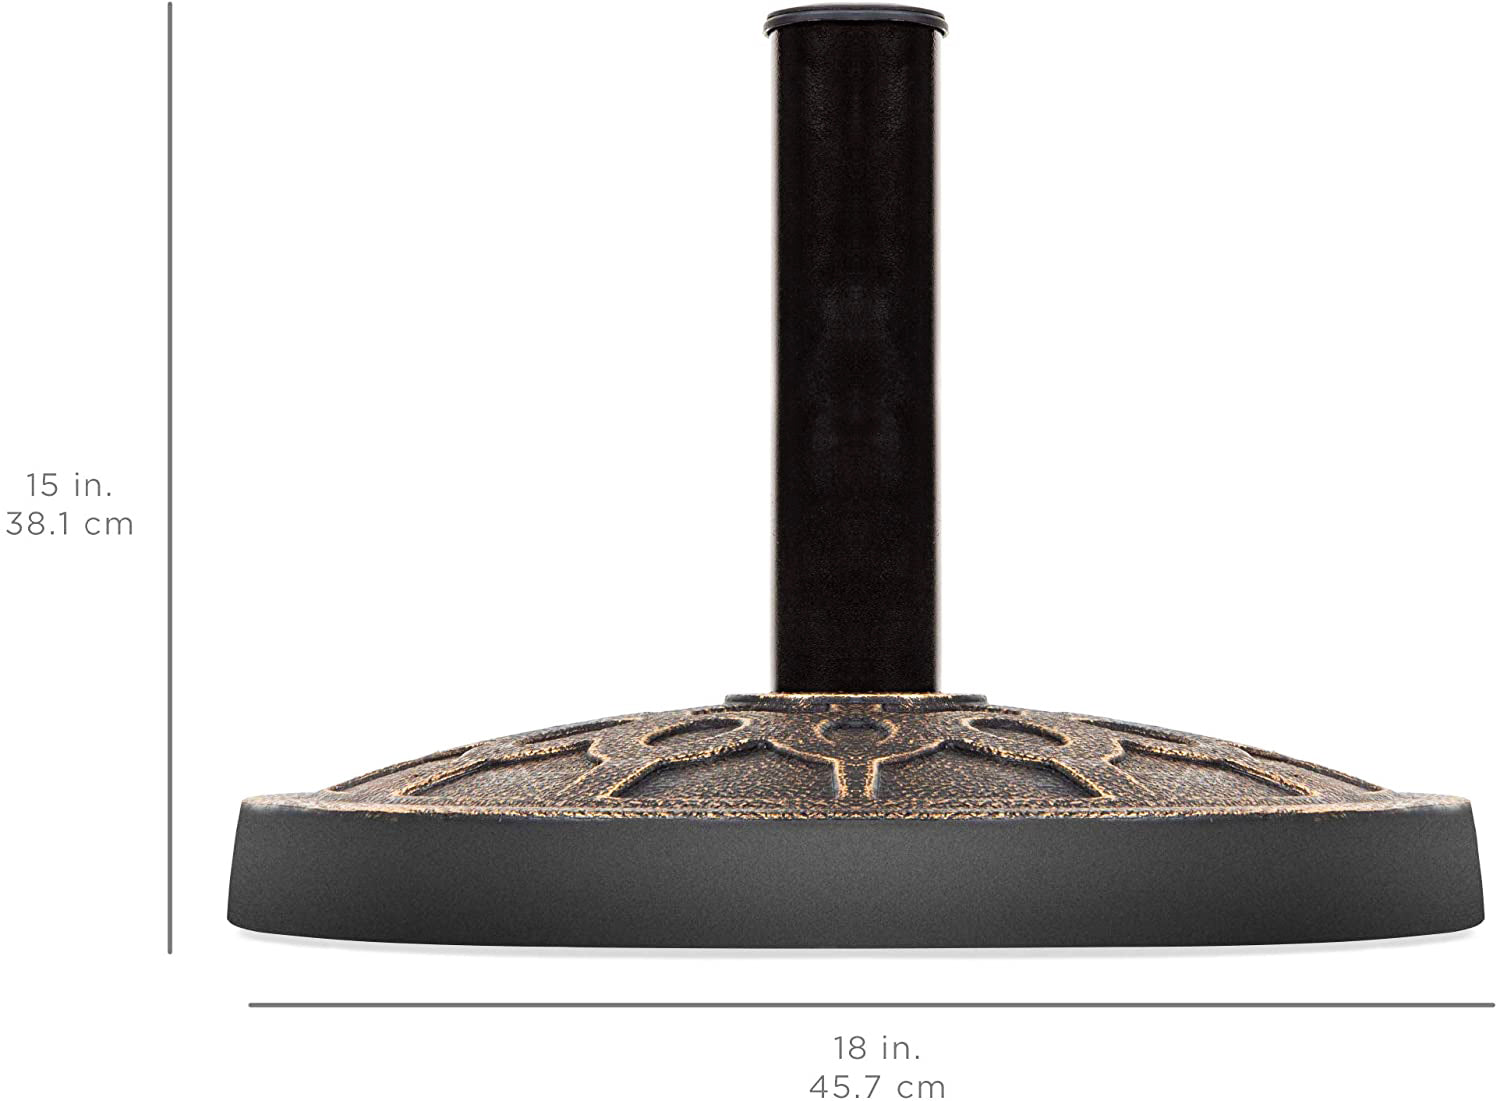 27.5 lbs. Circle Weave Round Resin Patio Umbrella Base in Antique Bronze